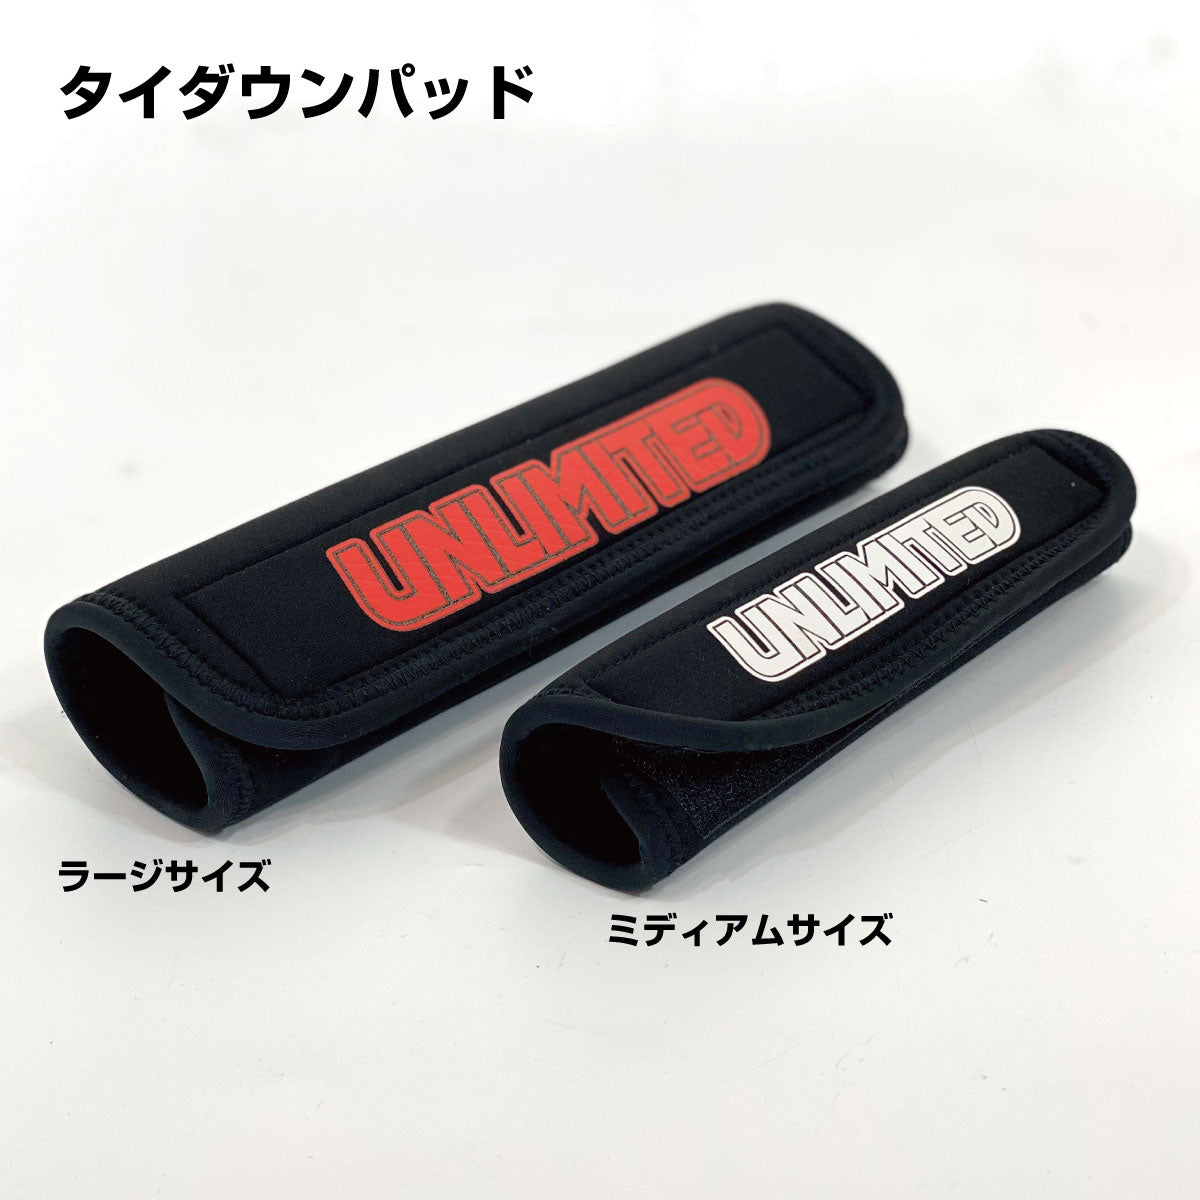 UNLIMITED tie down belt cover M medium ULT131BK-M